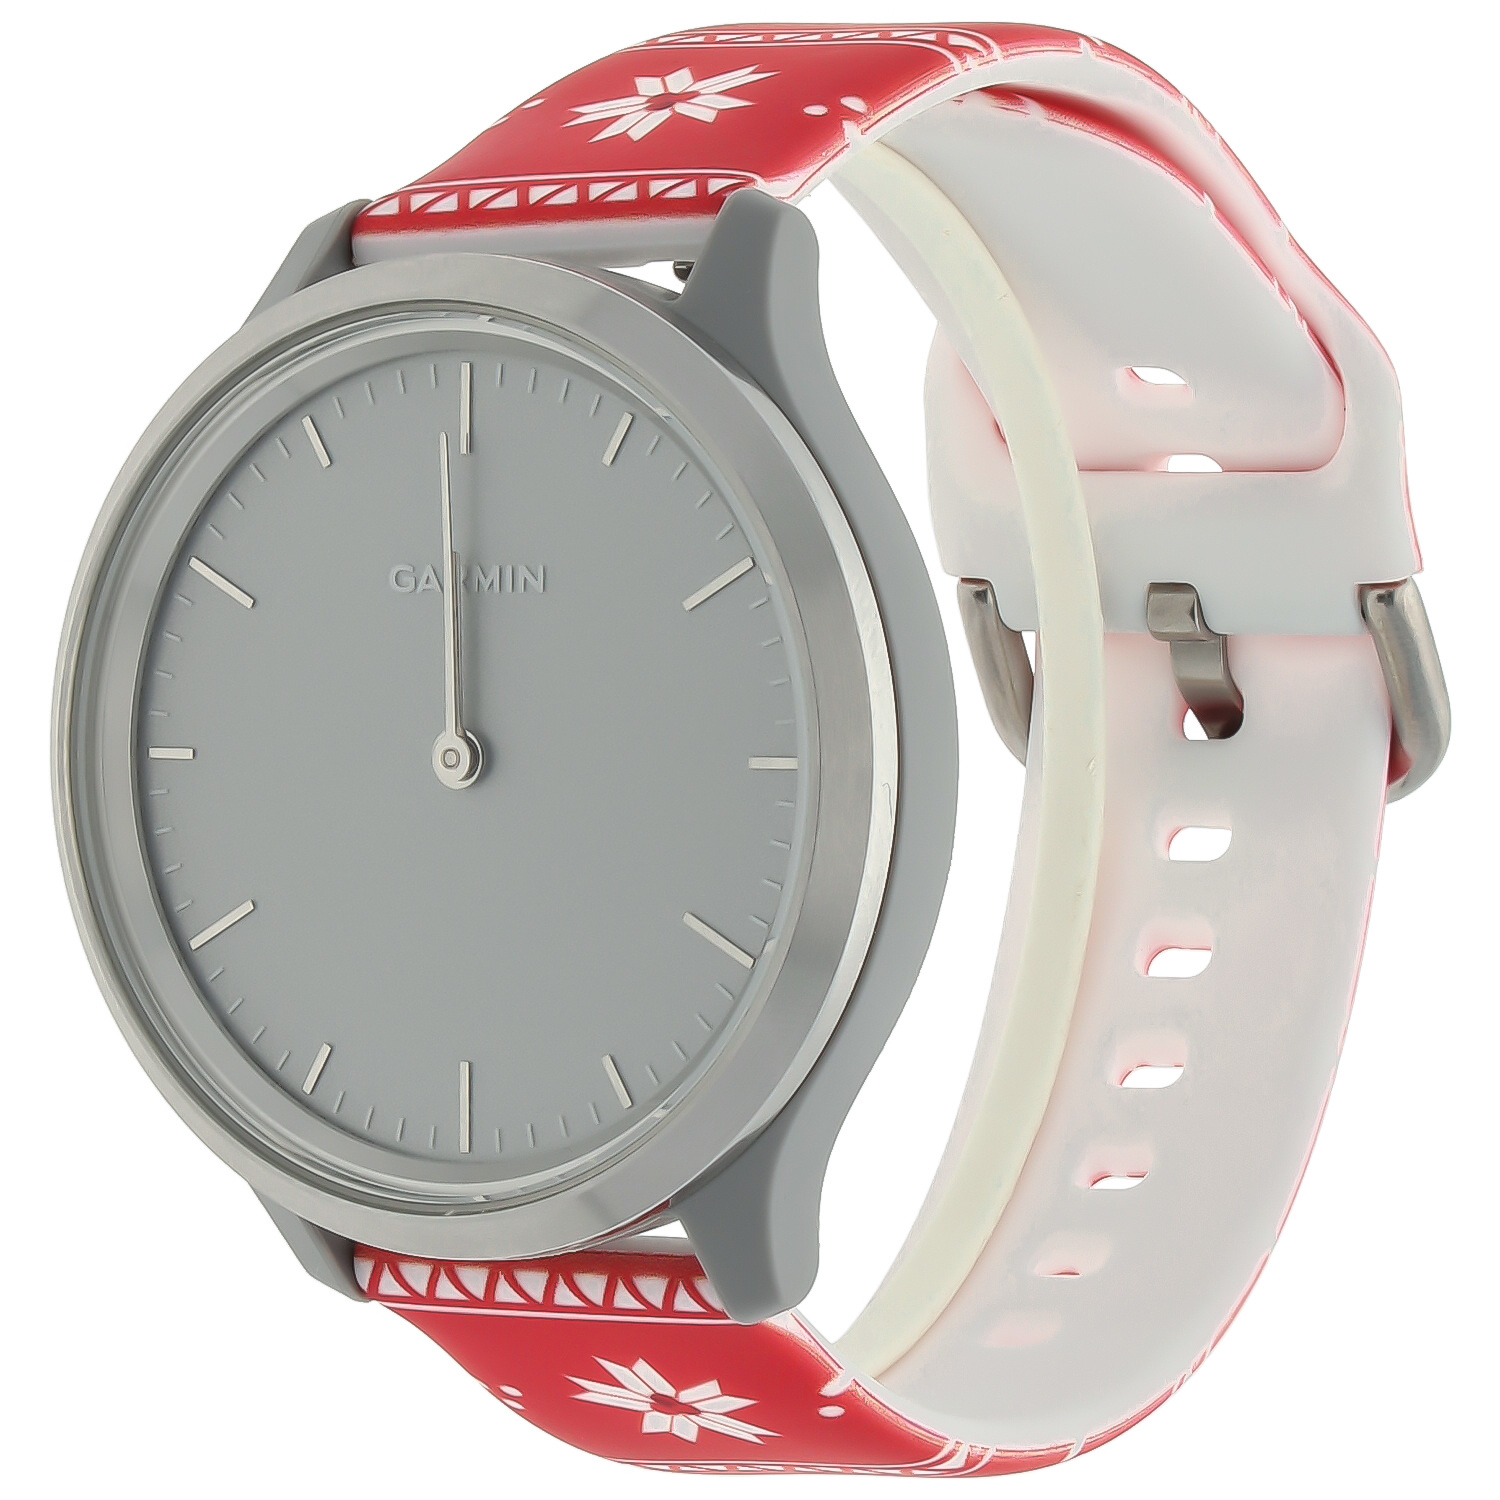 Bracelet sport imprimé Huawei Watch GT - rouge poinsettia de Noël